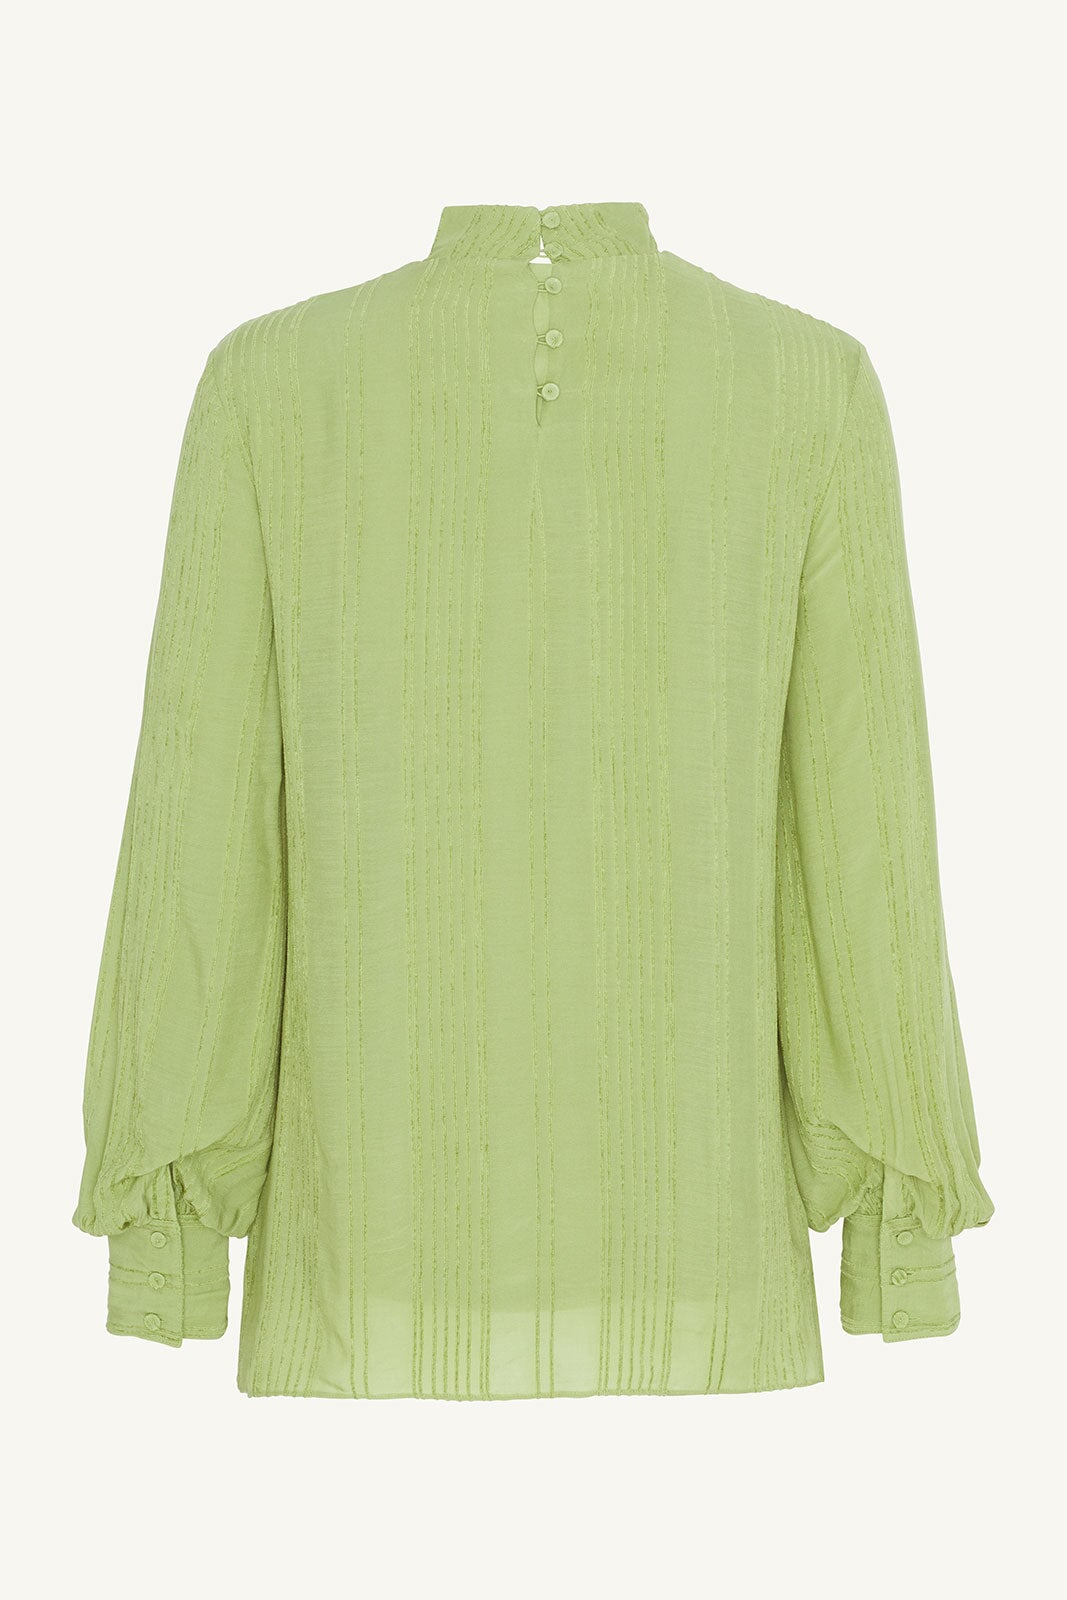 Textured Rayon Balloon Sleeve Blouse - Fern Green Clothing saigonodysseyhotel 